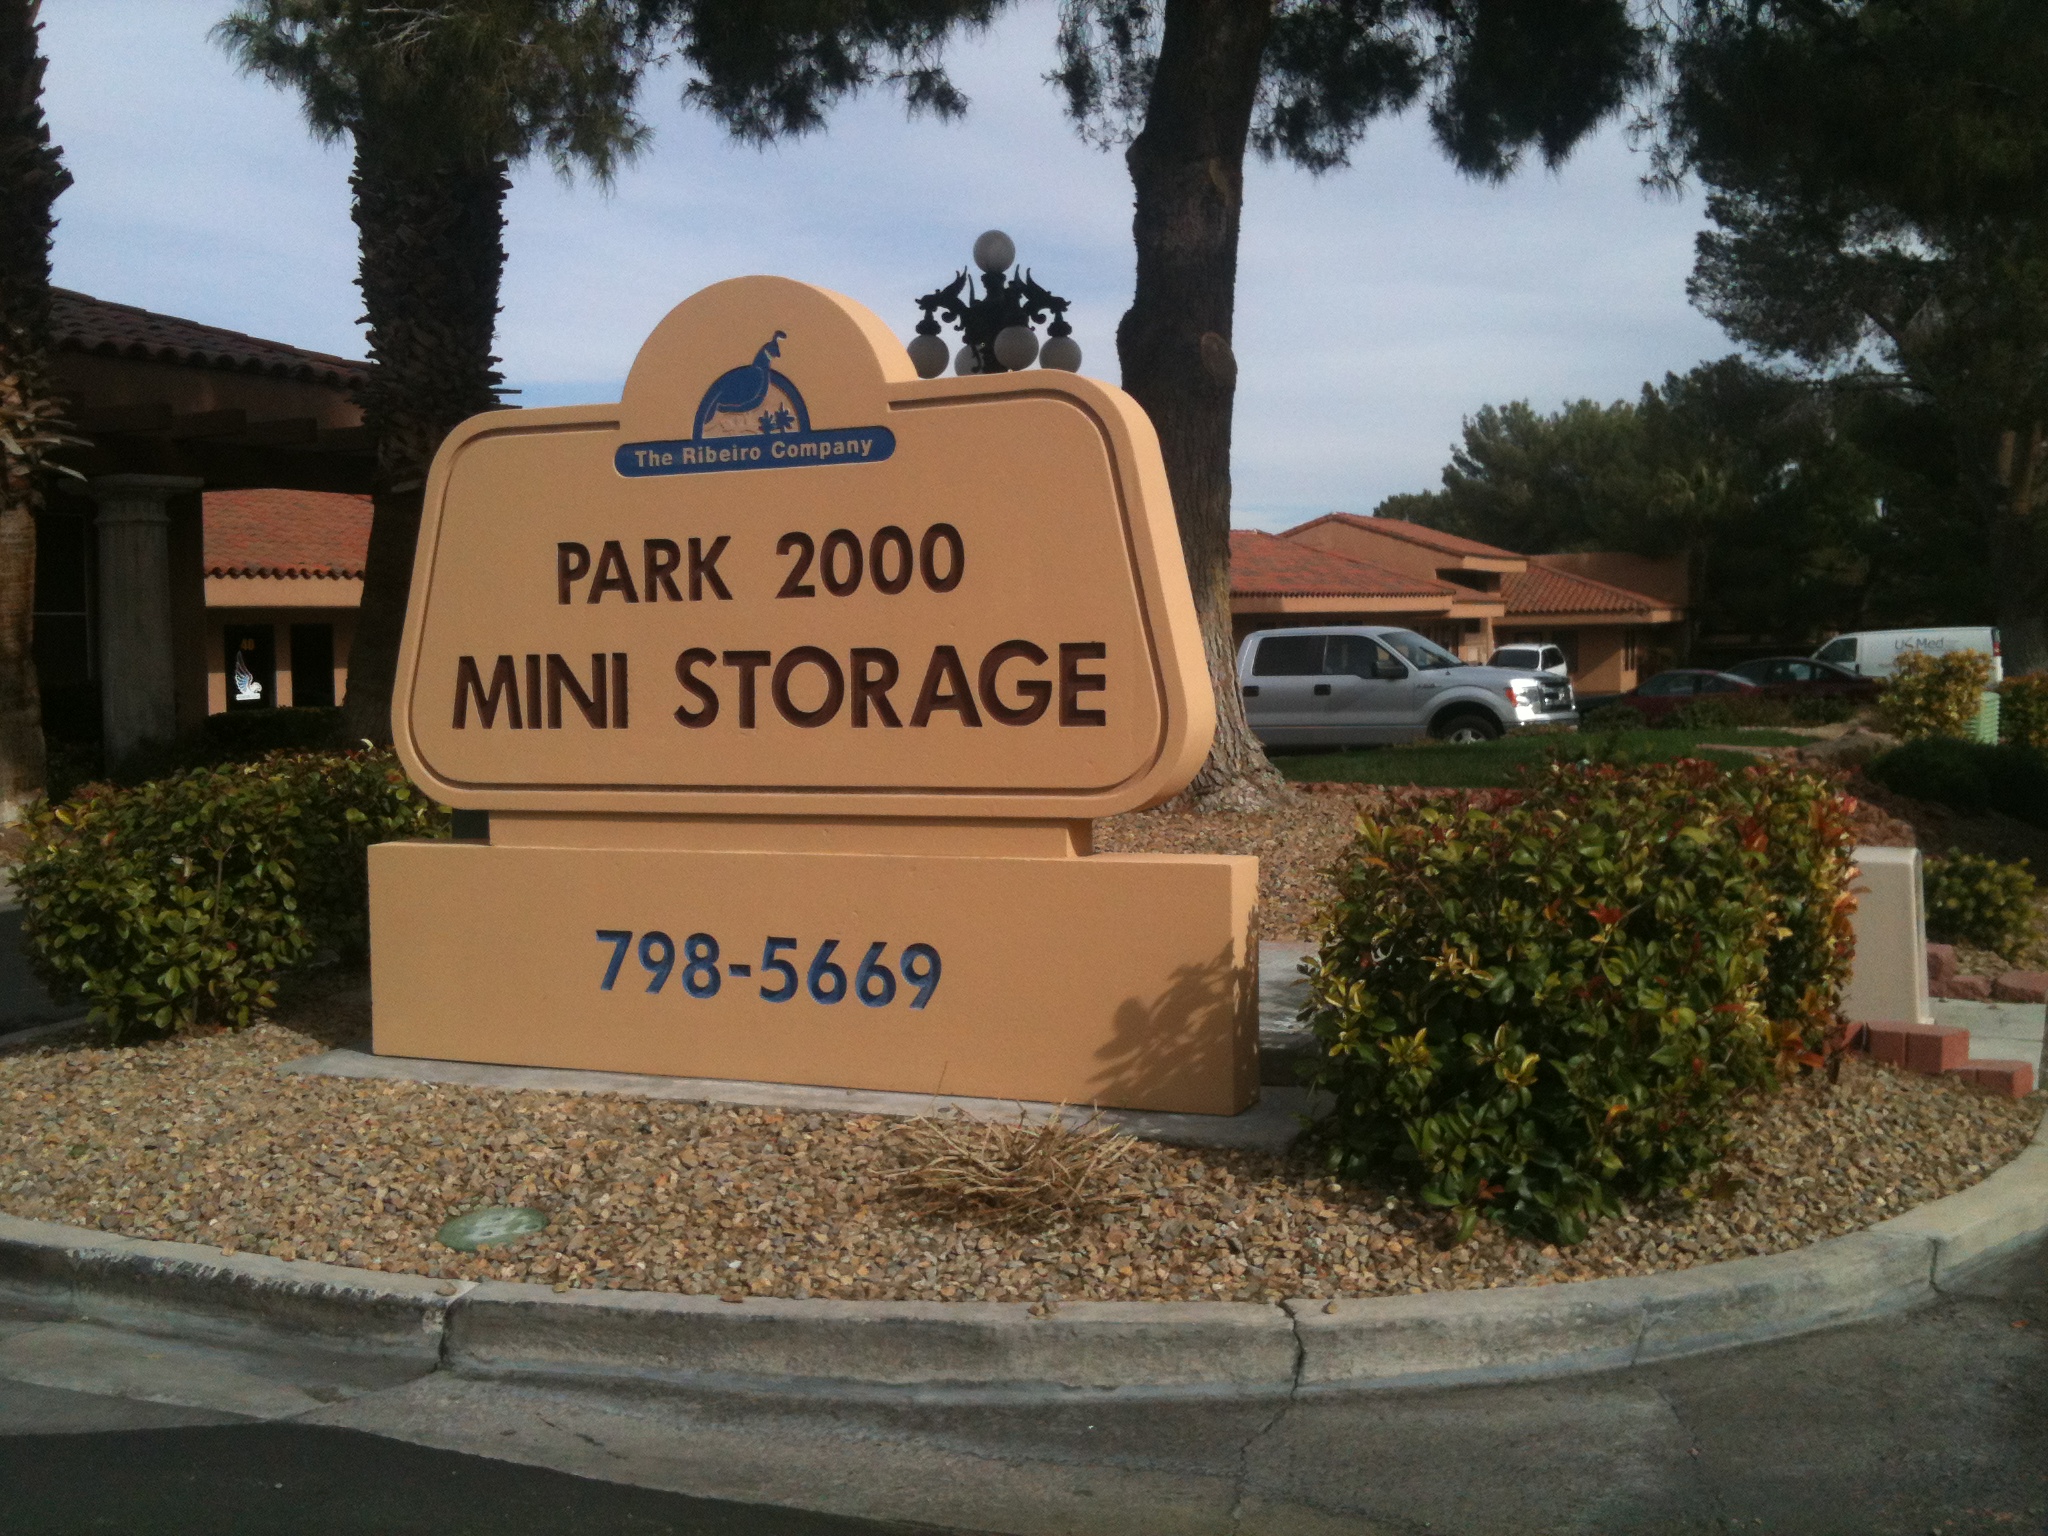 Park 2000 Mini Storage